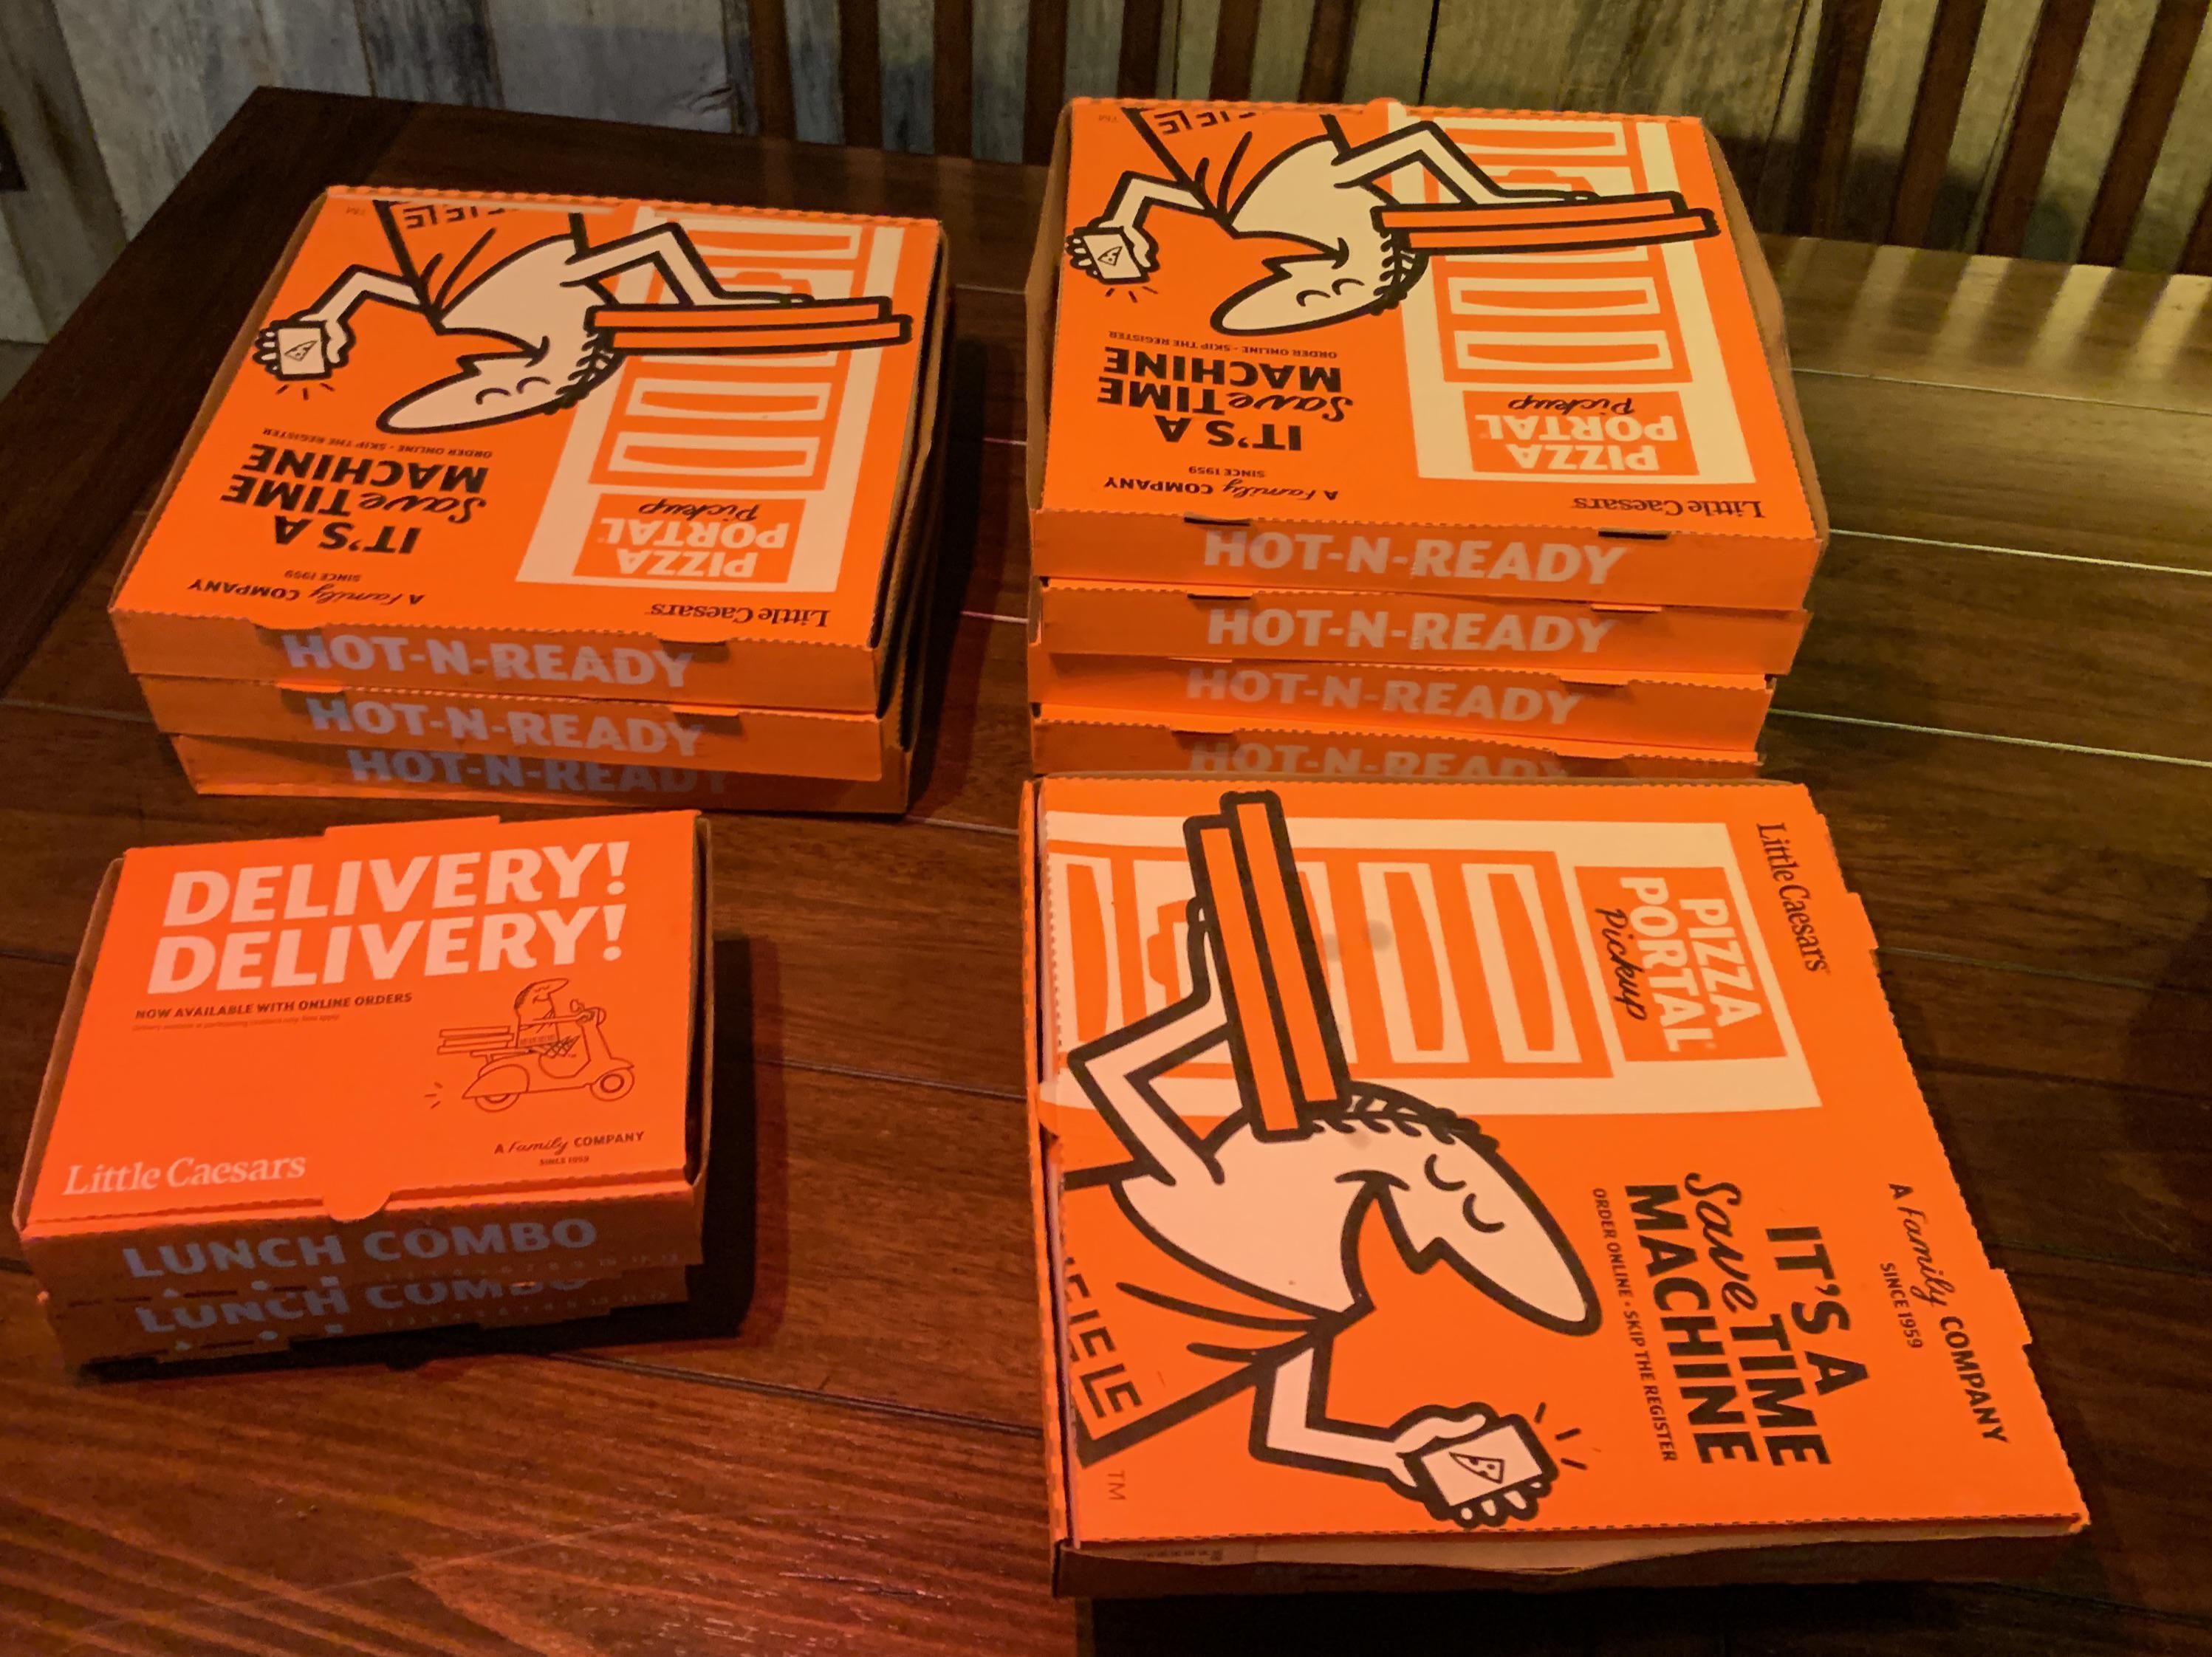 Little Caesars Pizza Delivery: Enjoying Convenient Pizza Deliveries